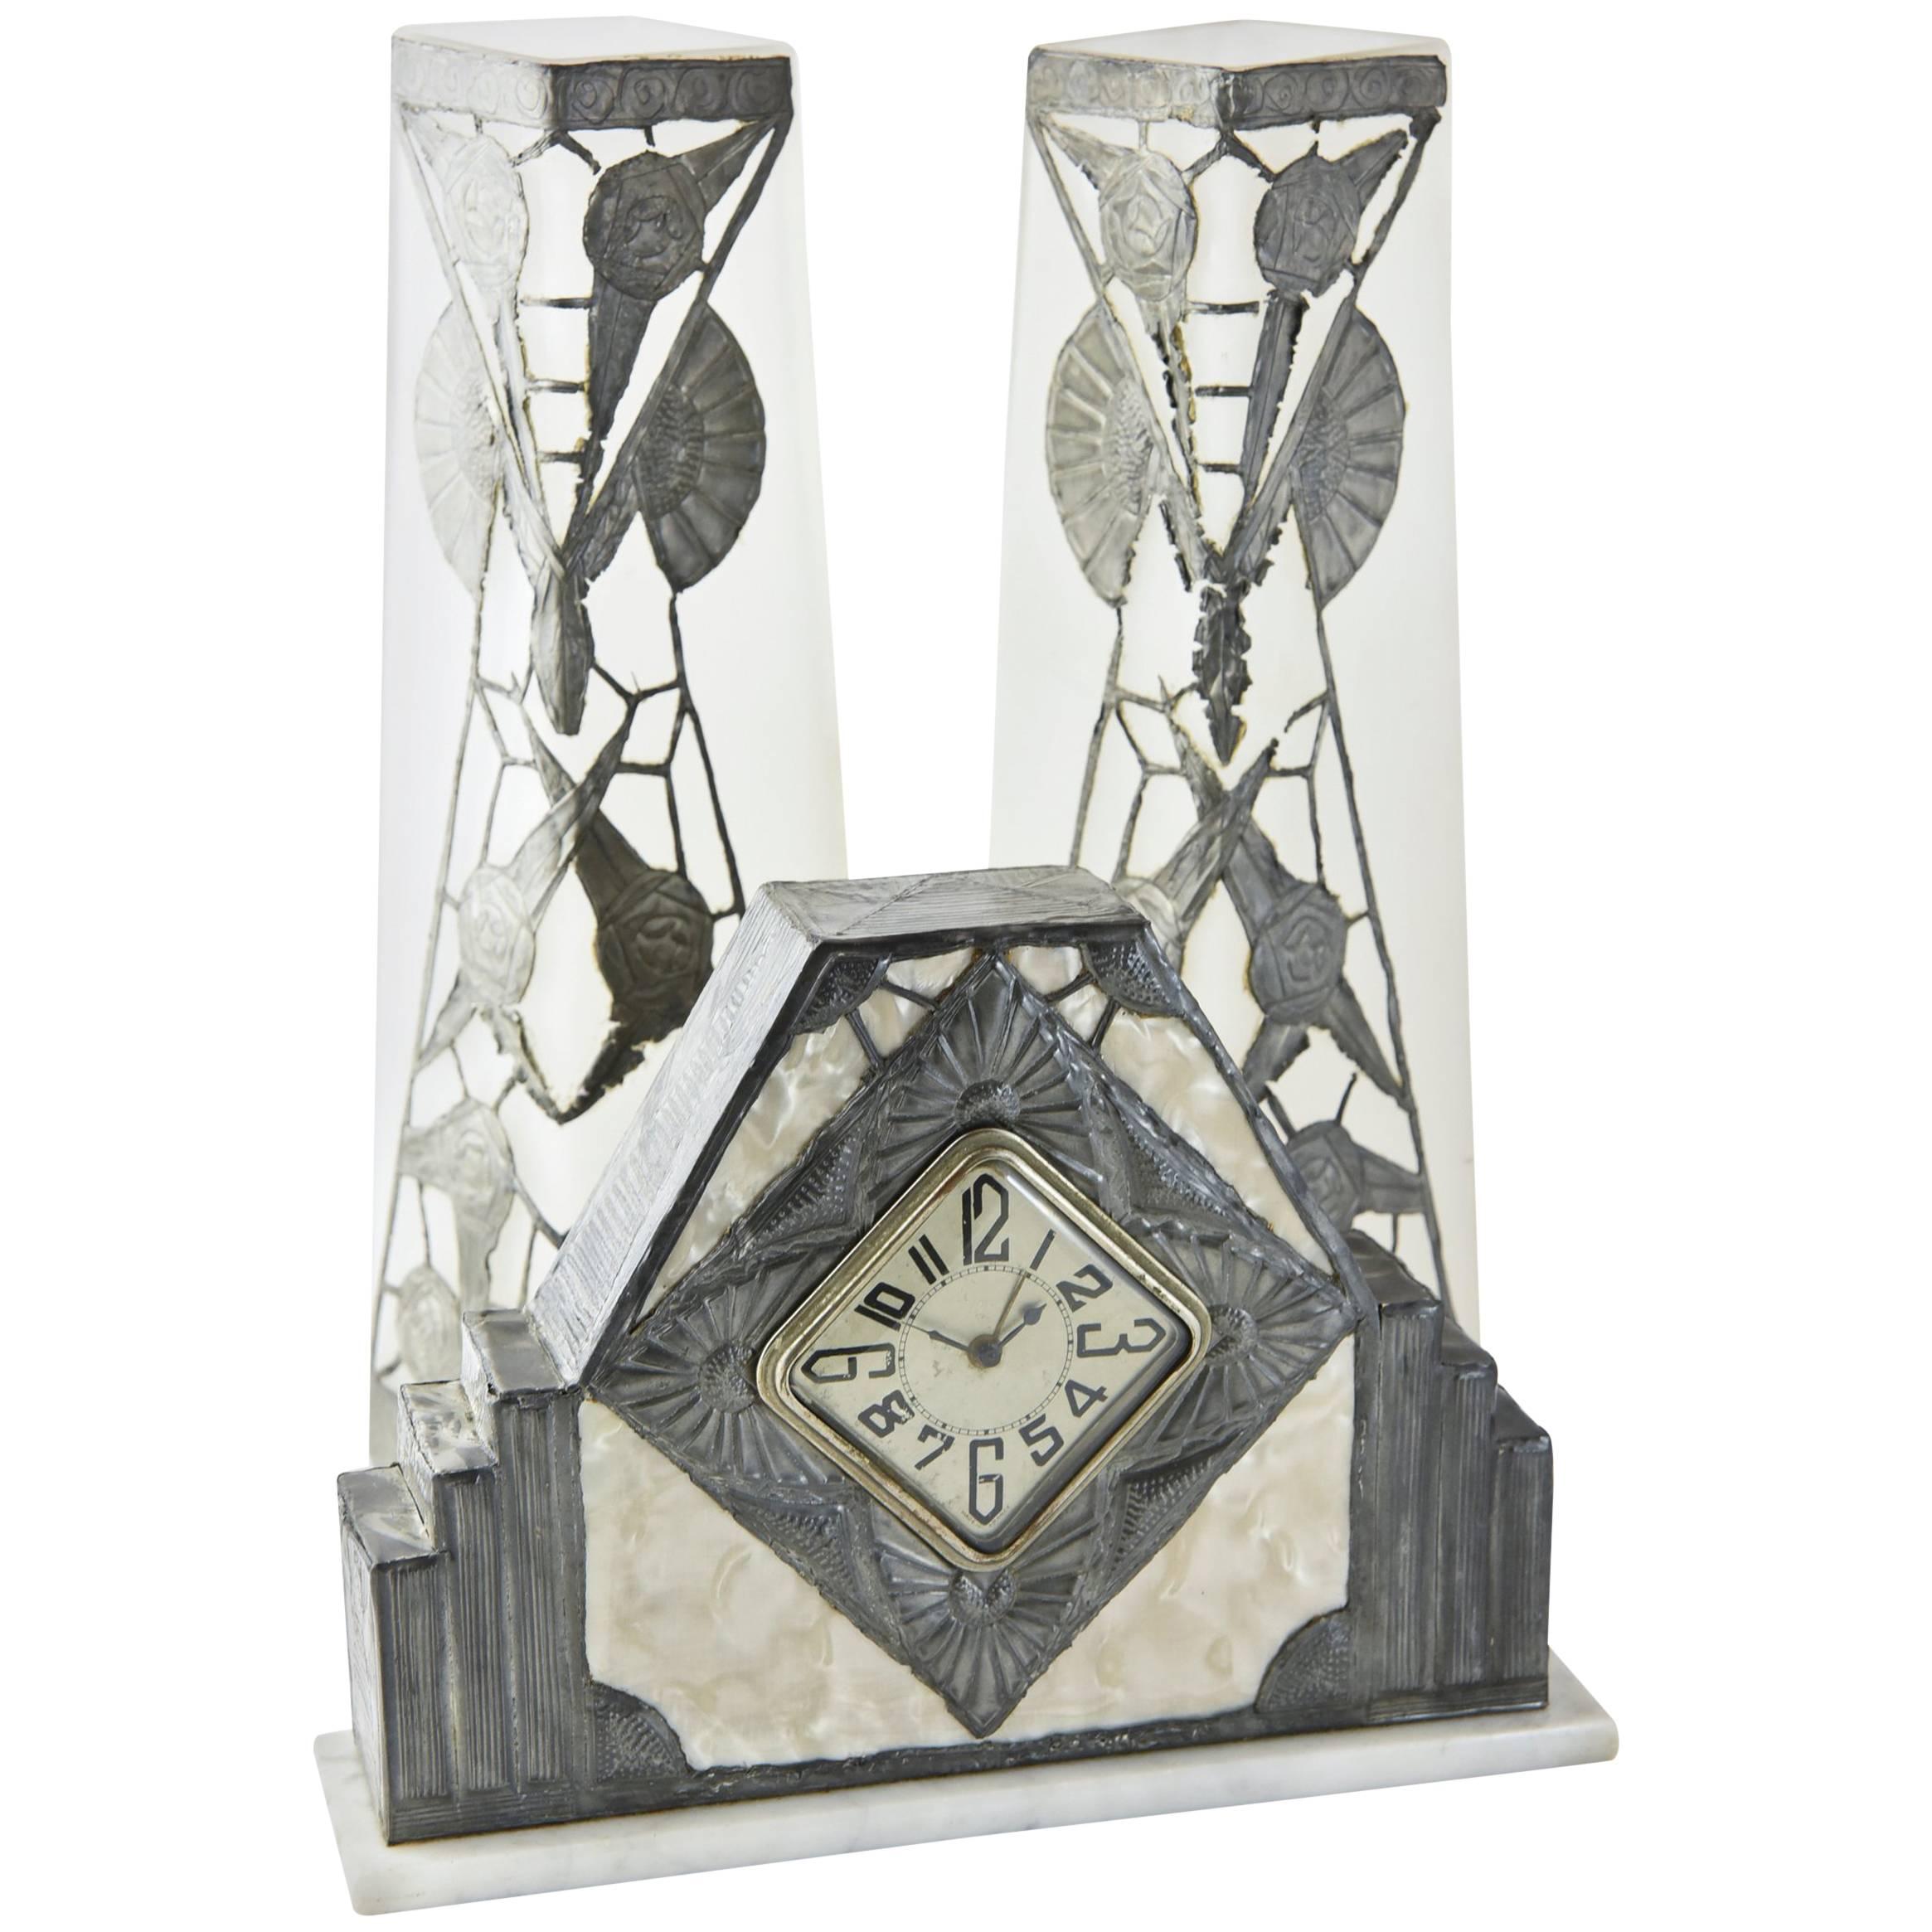 French Art Nouveau Clock and Vase Set by R. Ragu